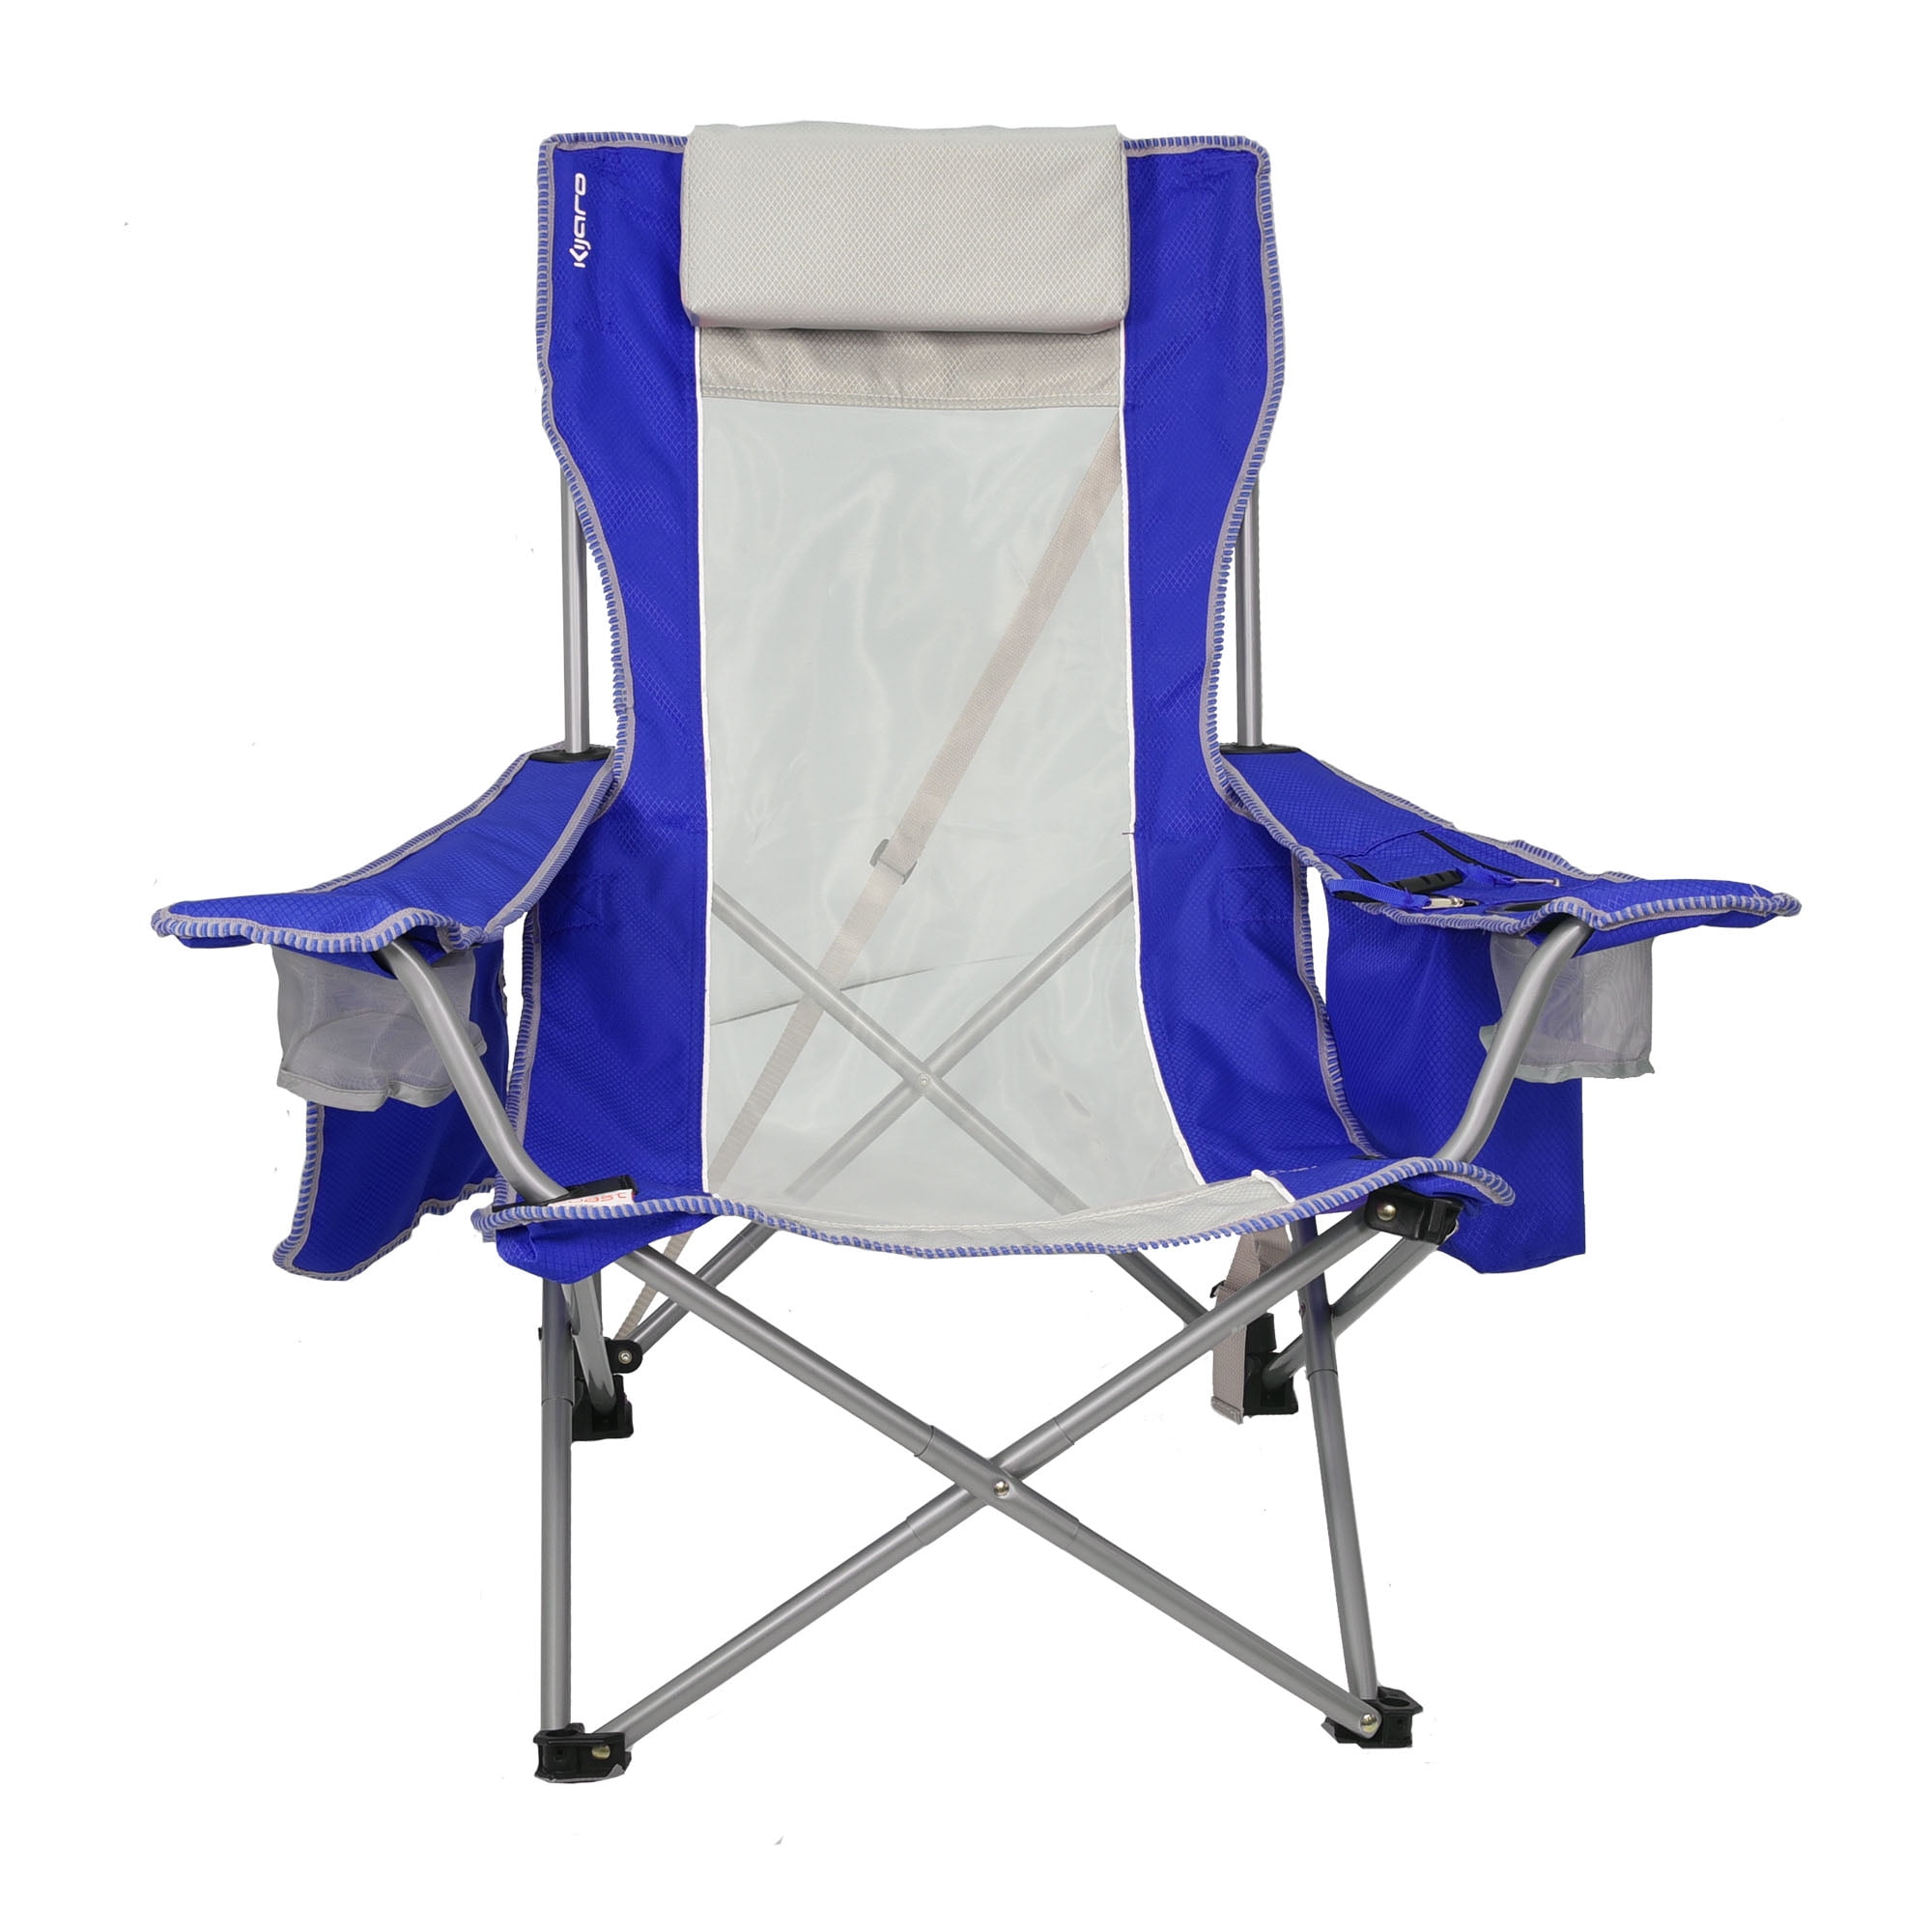 Beach Sling Chair - Walmart.com 